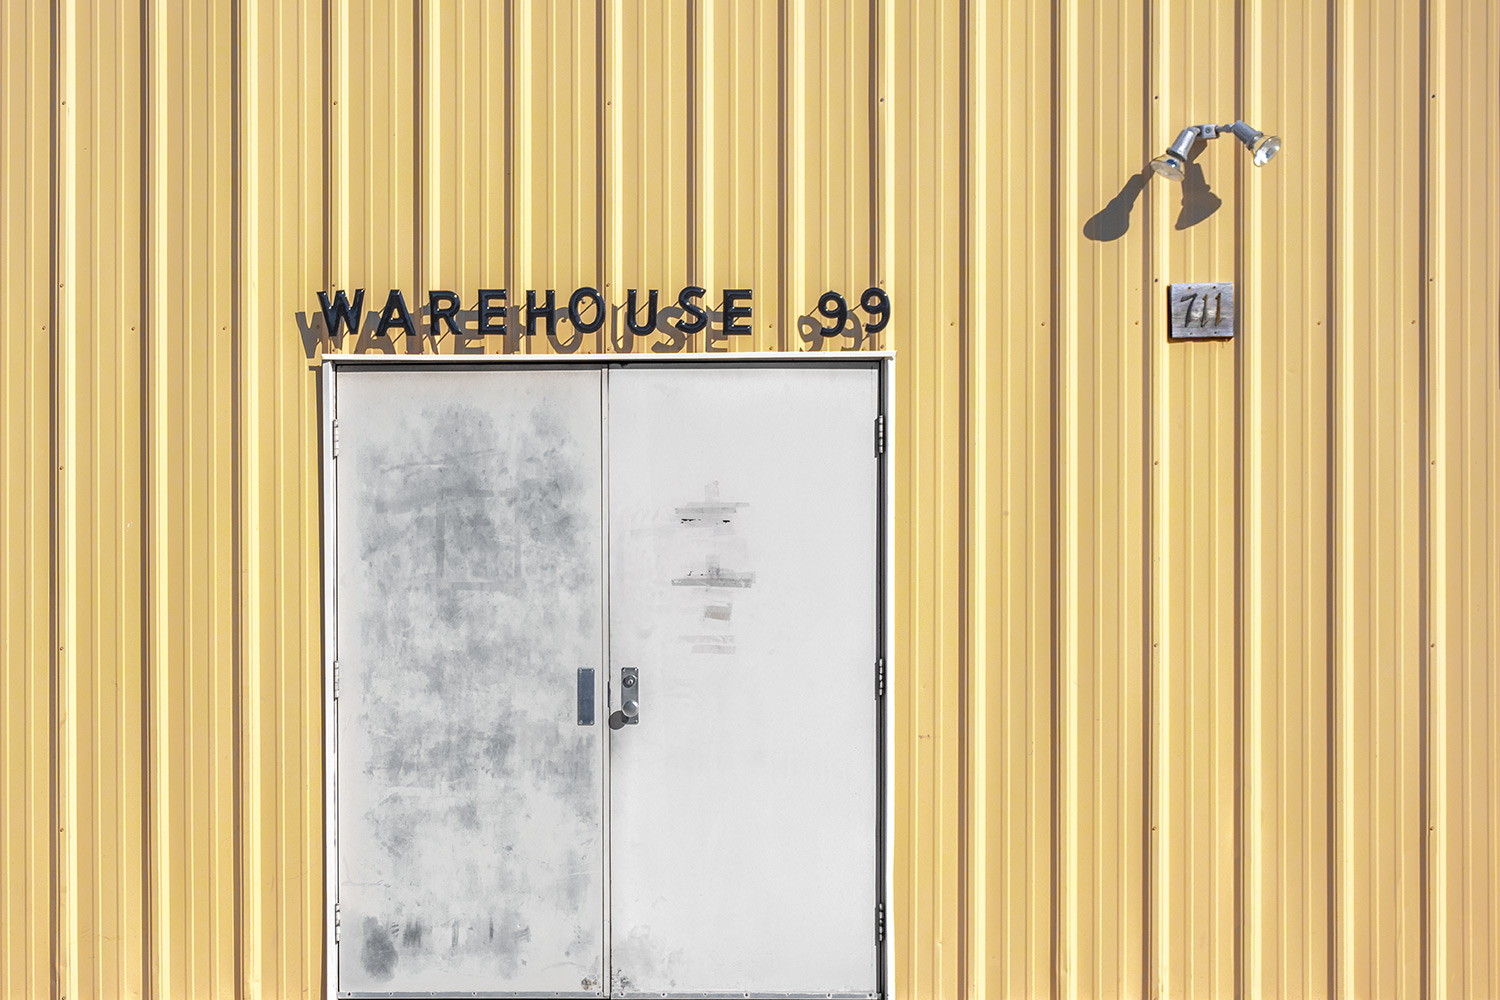 Warehouse 99